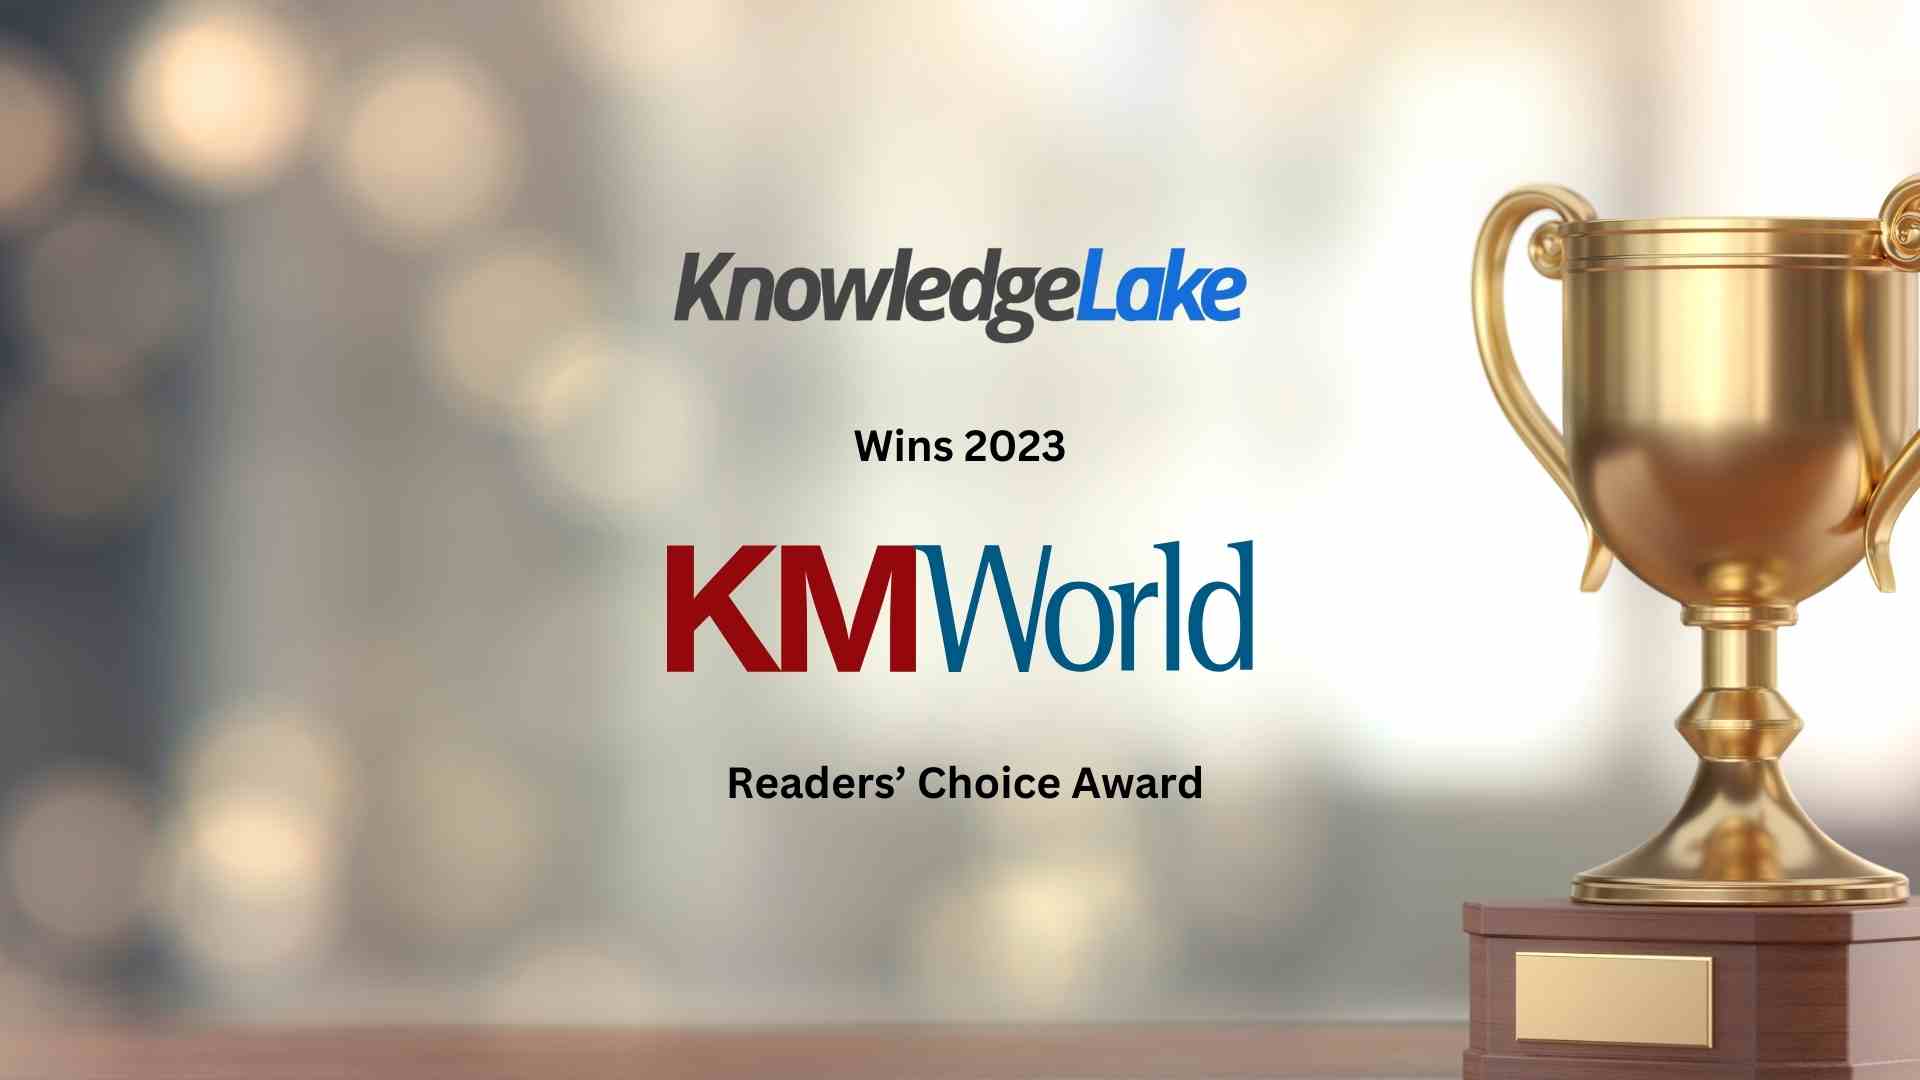 KnowledgeLake Wins 2023 KMWorld Readers' Choice Award